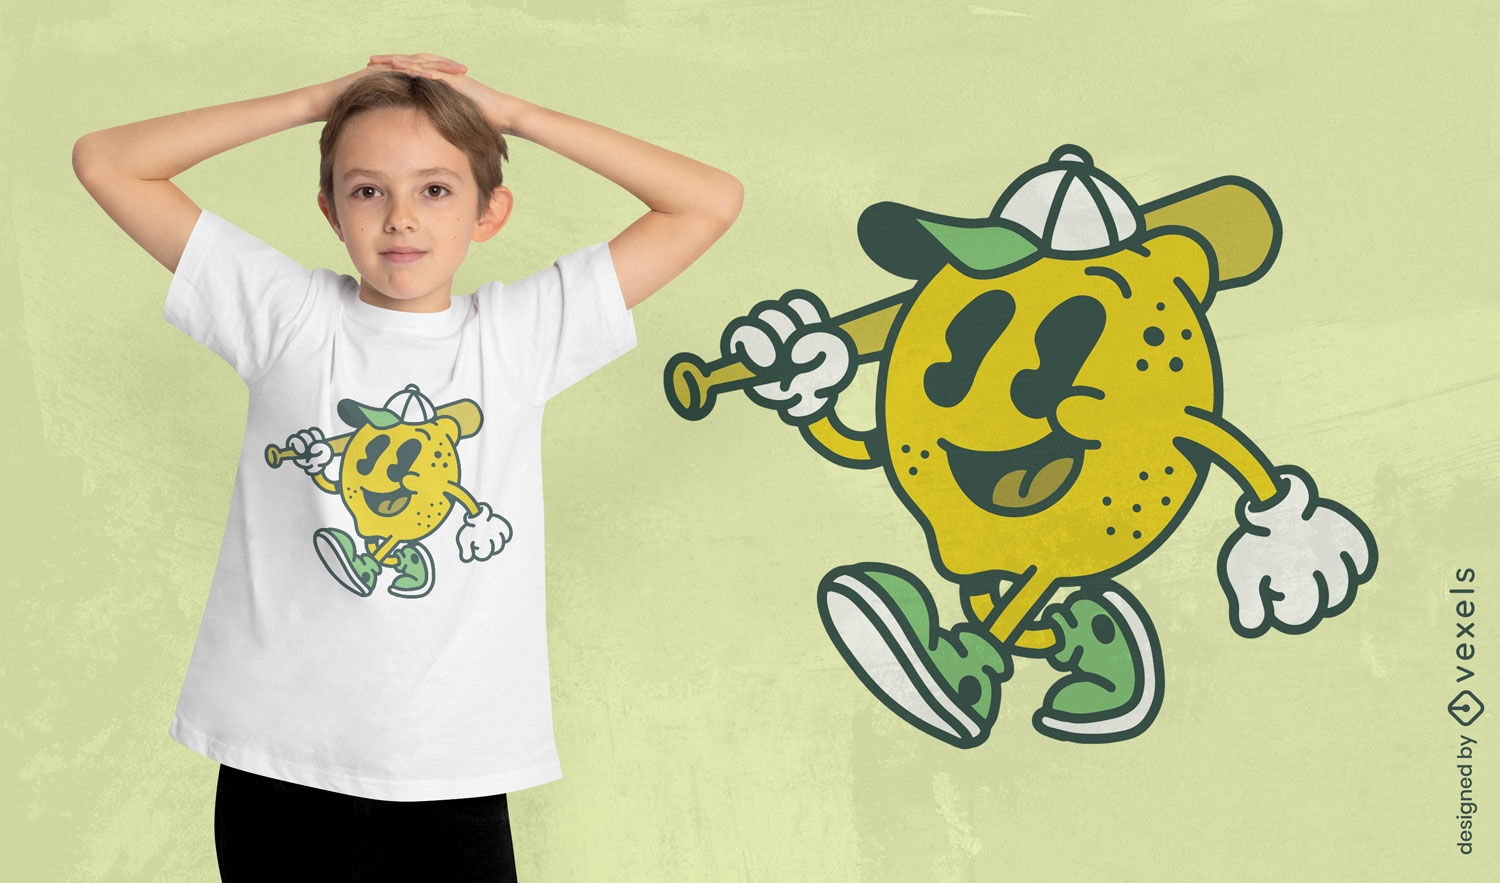 Diseño de camiseta de jugador de béisbol de limón.